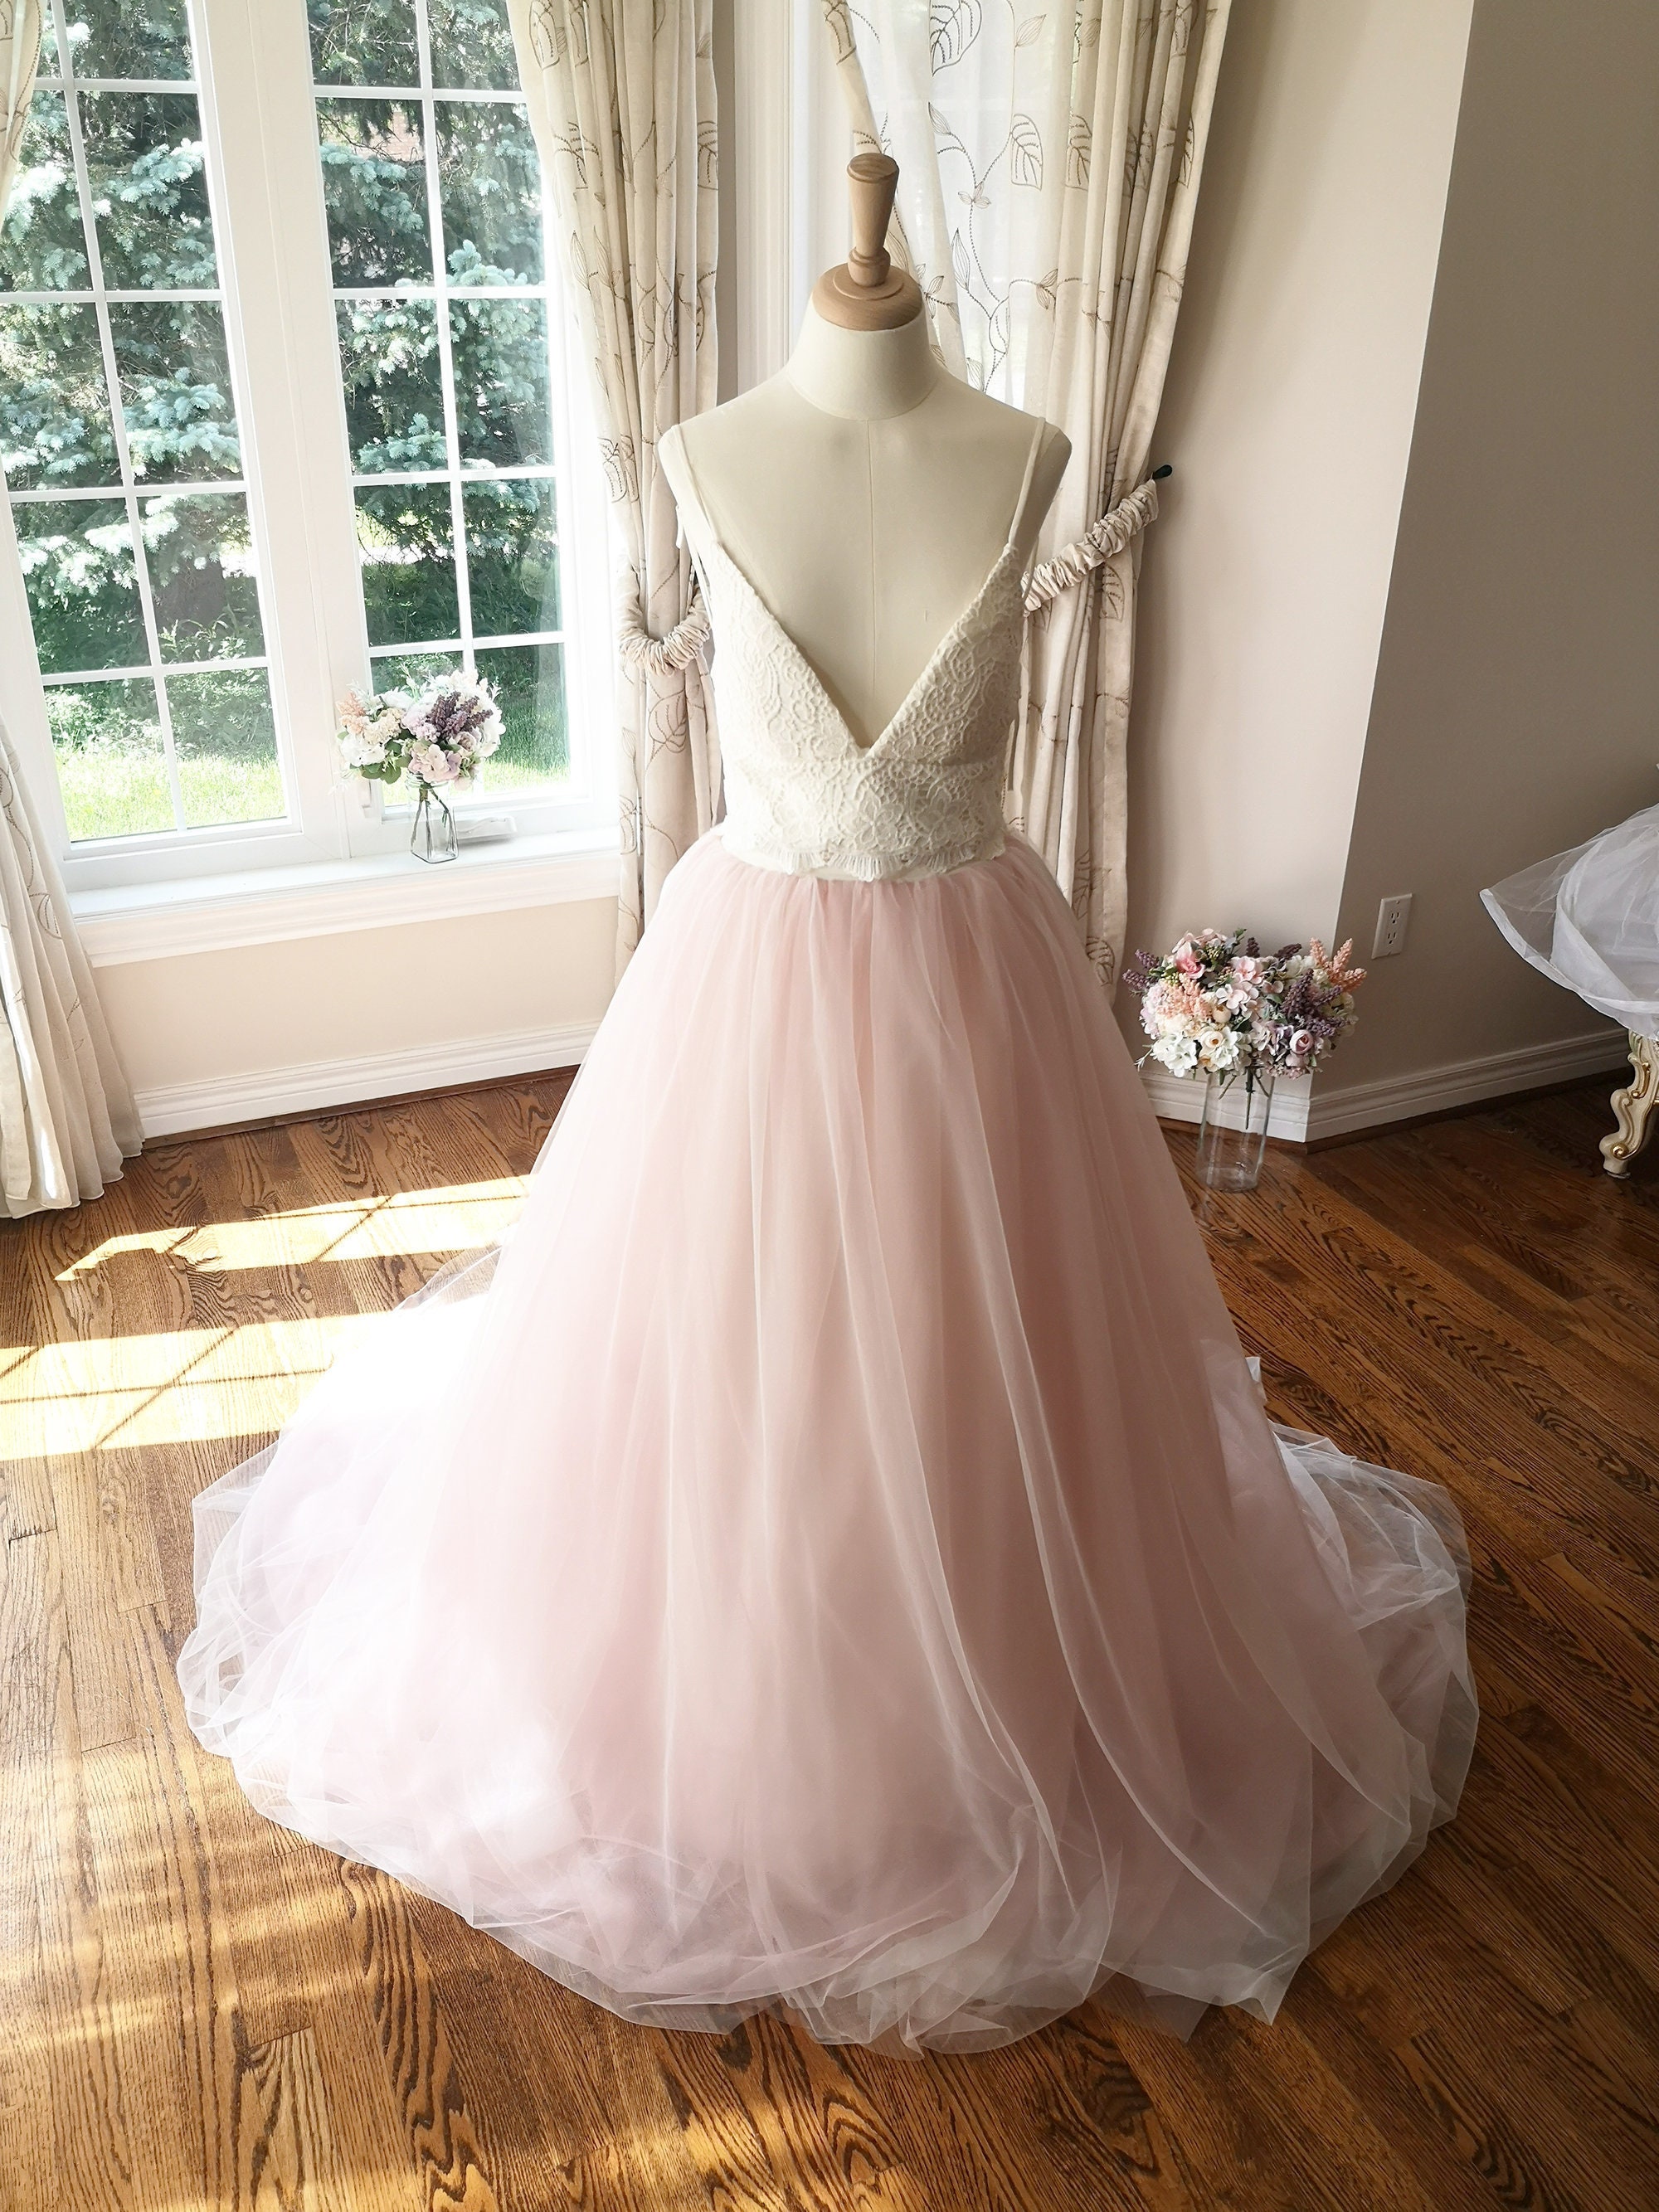 Tulle Blush Pink Bridesmaid Dresses Off-the-shoulder – loveangeldress